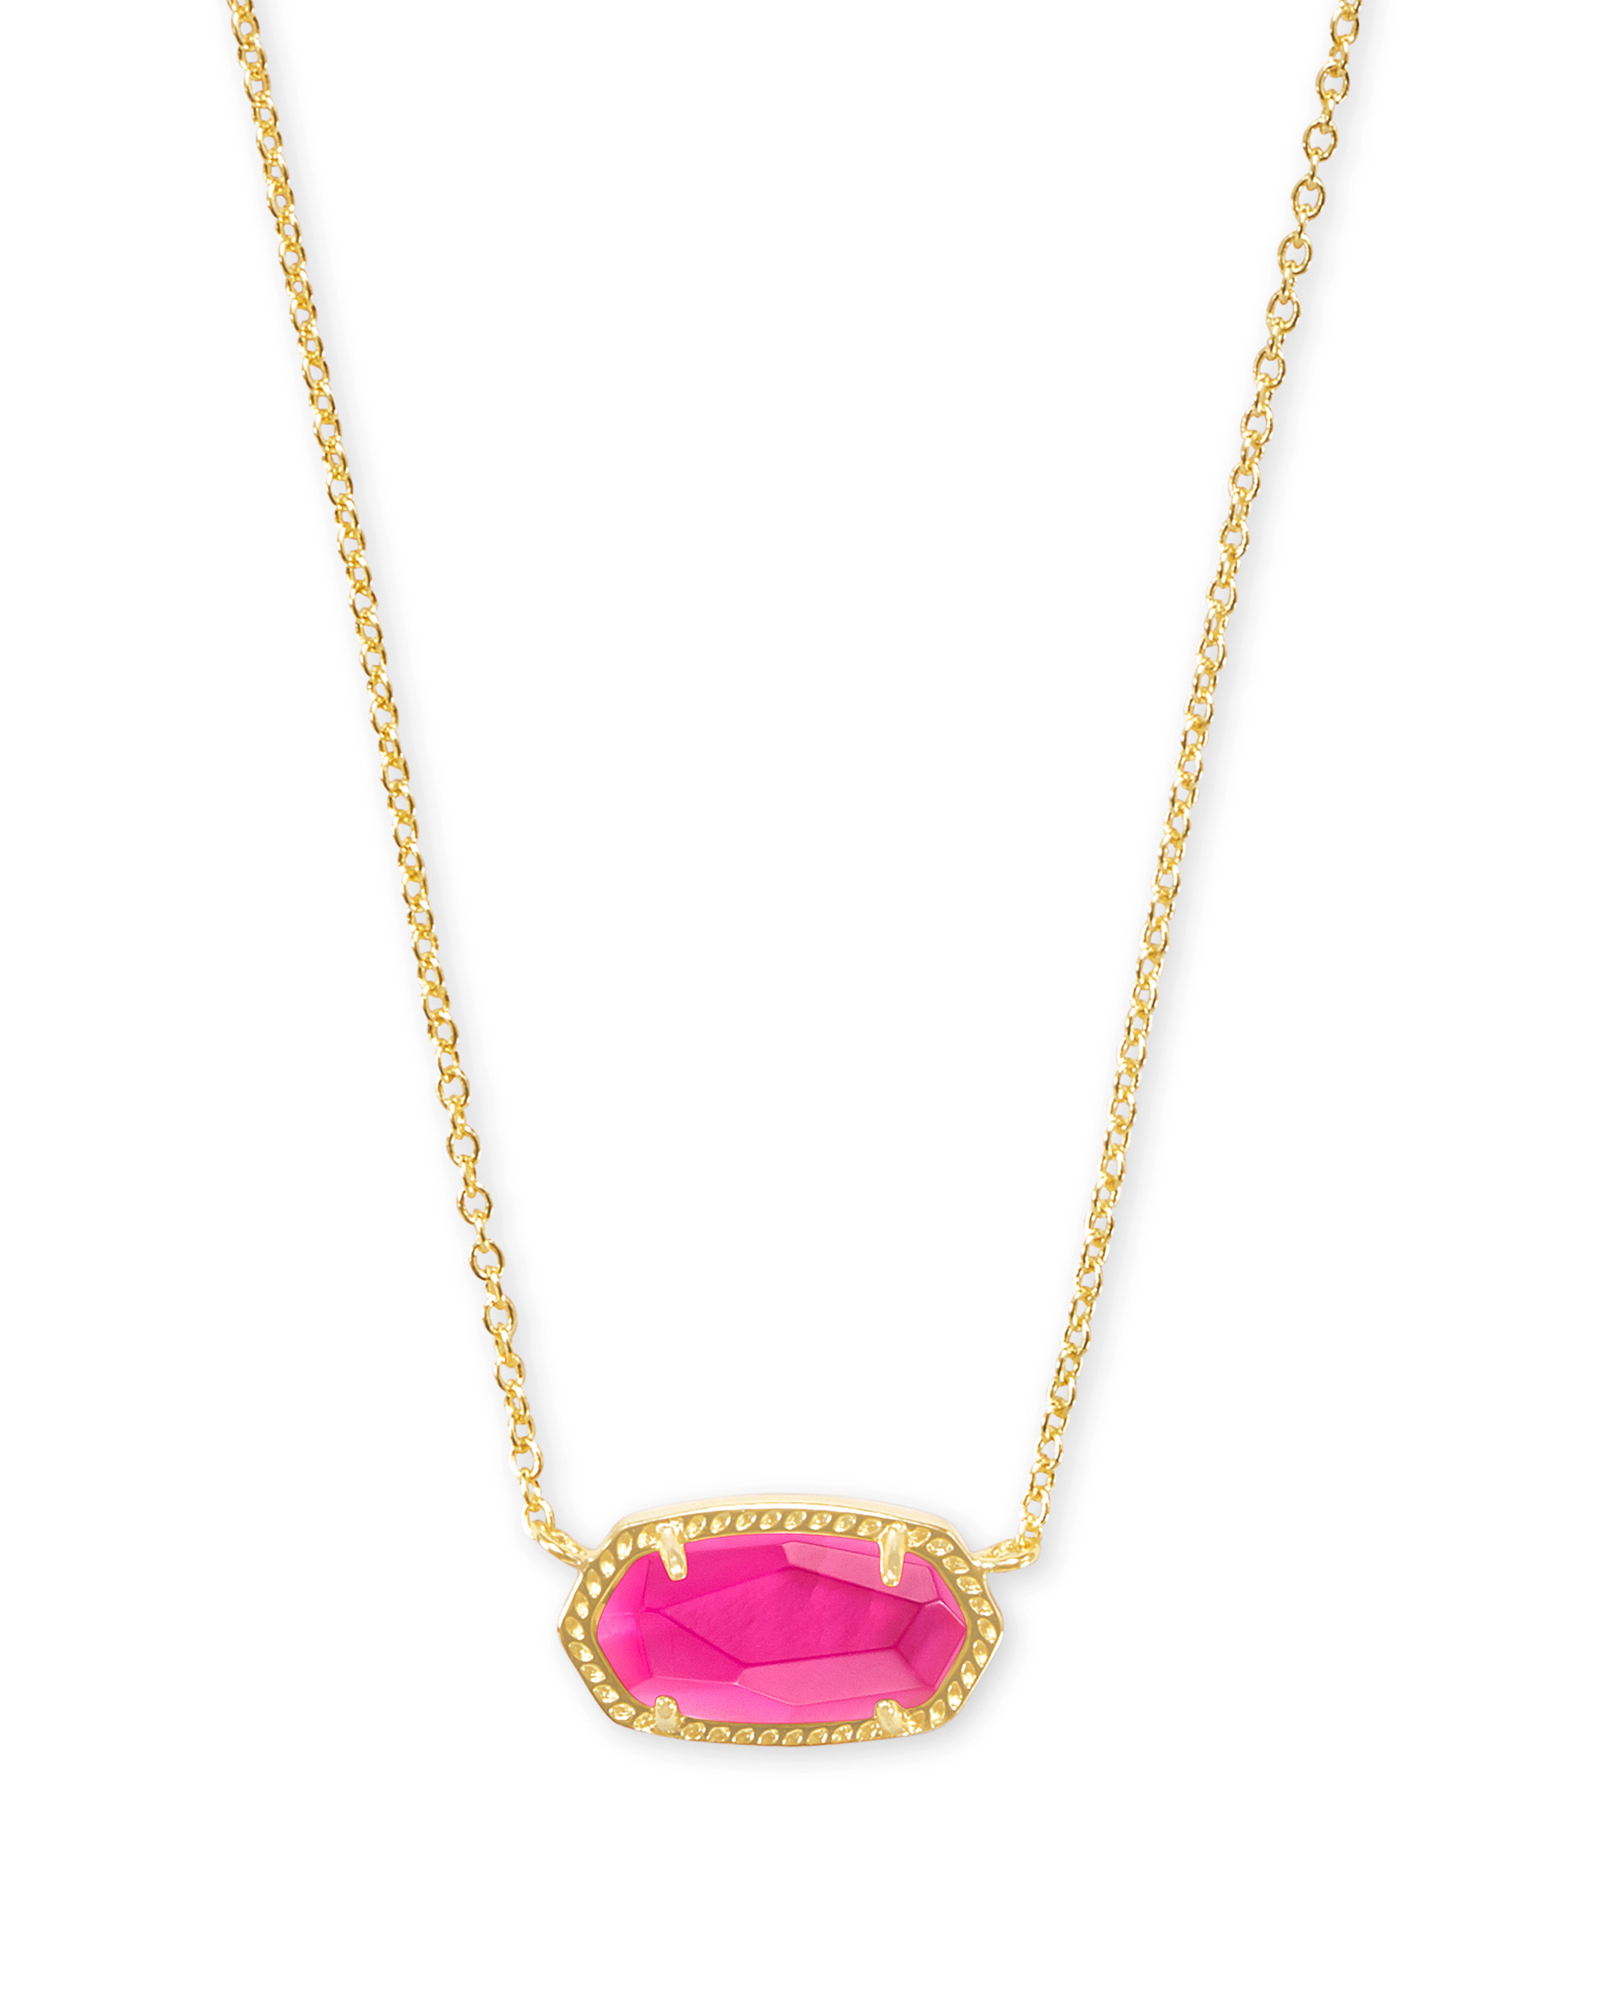 Elisa Gold Pendant Necklace in Azalea Illusion | Kendra Scott | Preppy  jewelry, Jewelry, Jewelry accessories ideas